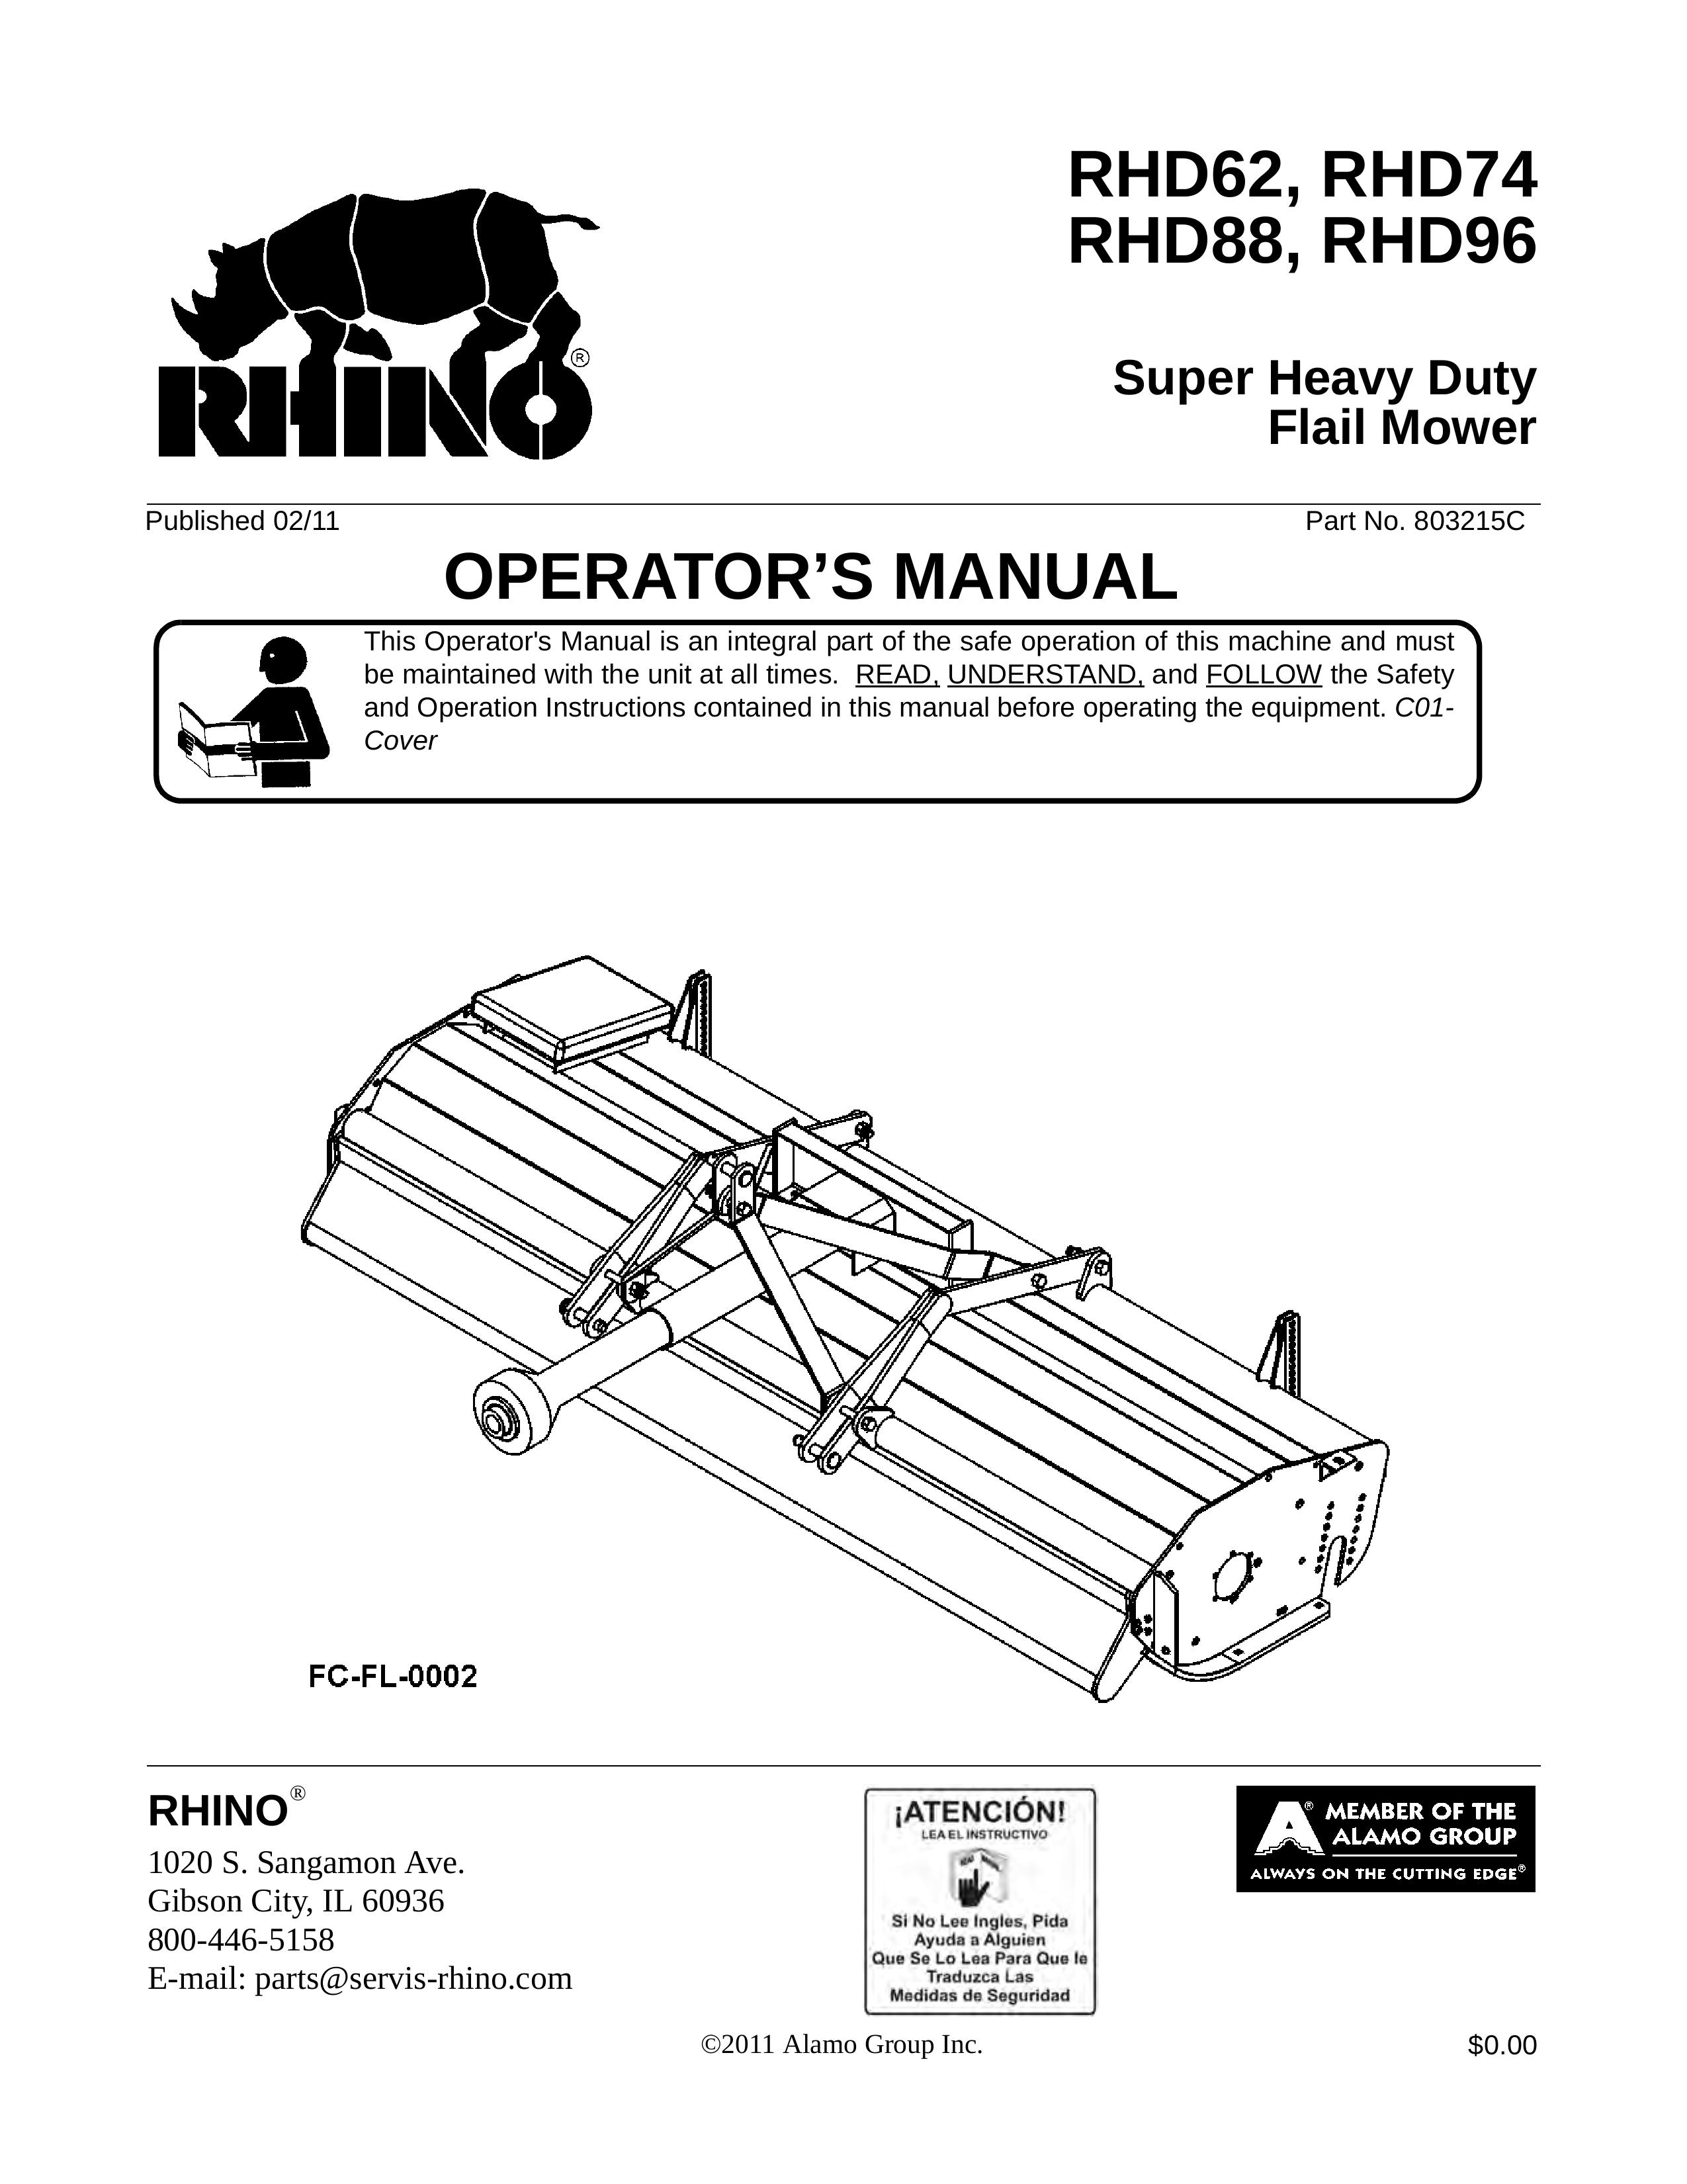 Rhino Mounts RHD62 Lawn Mower User Manual